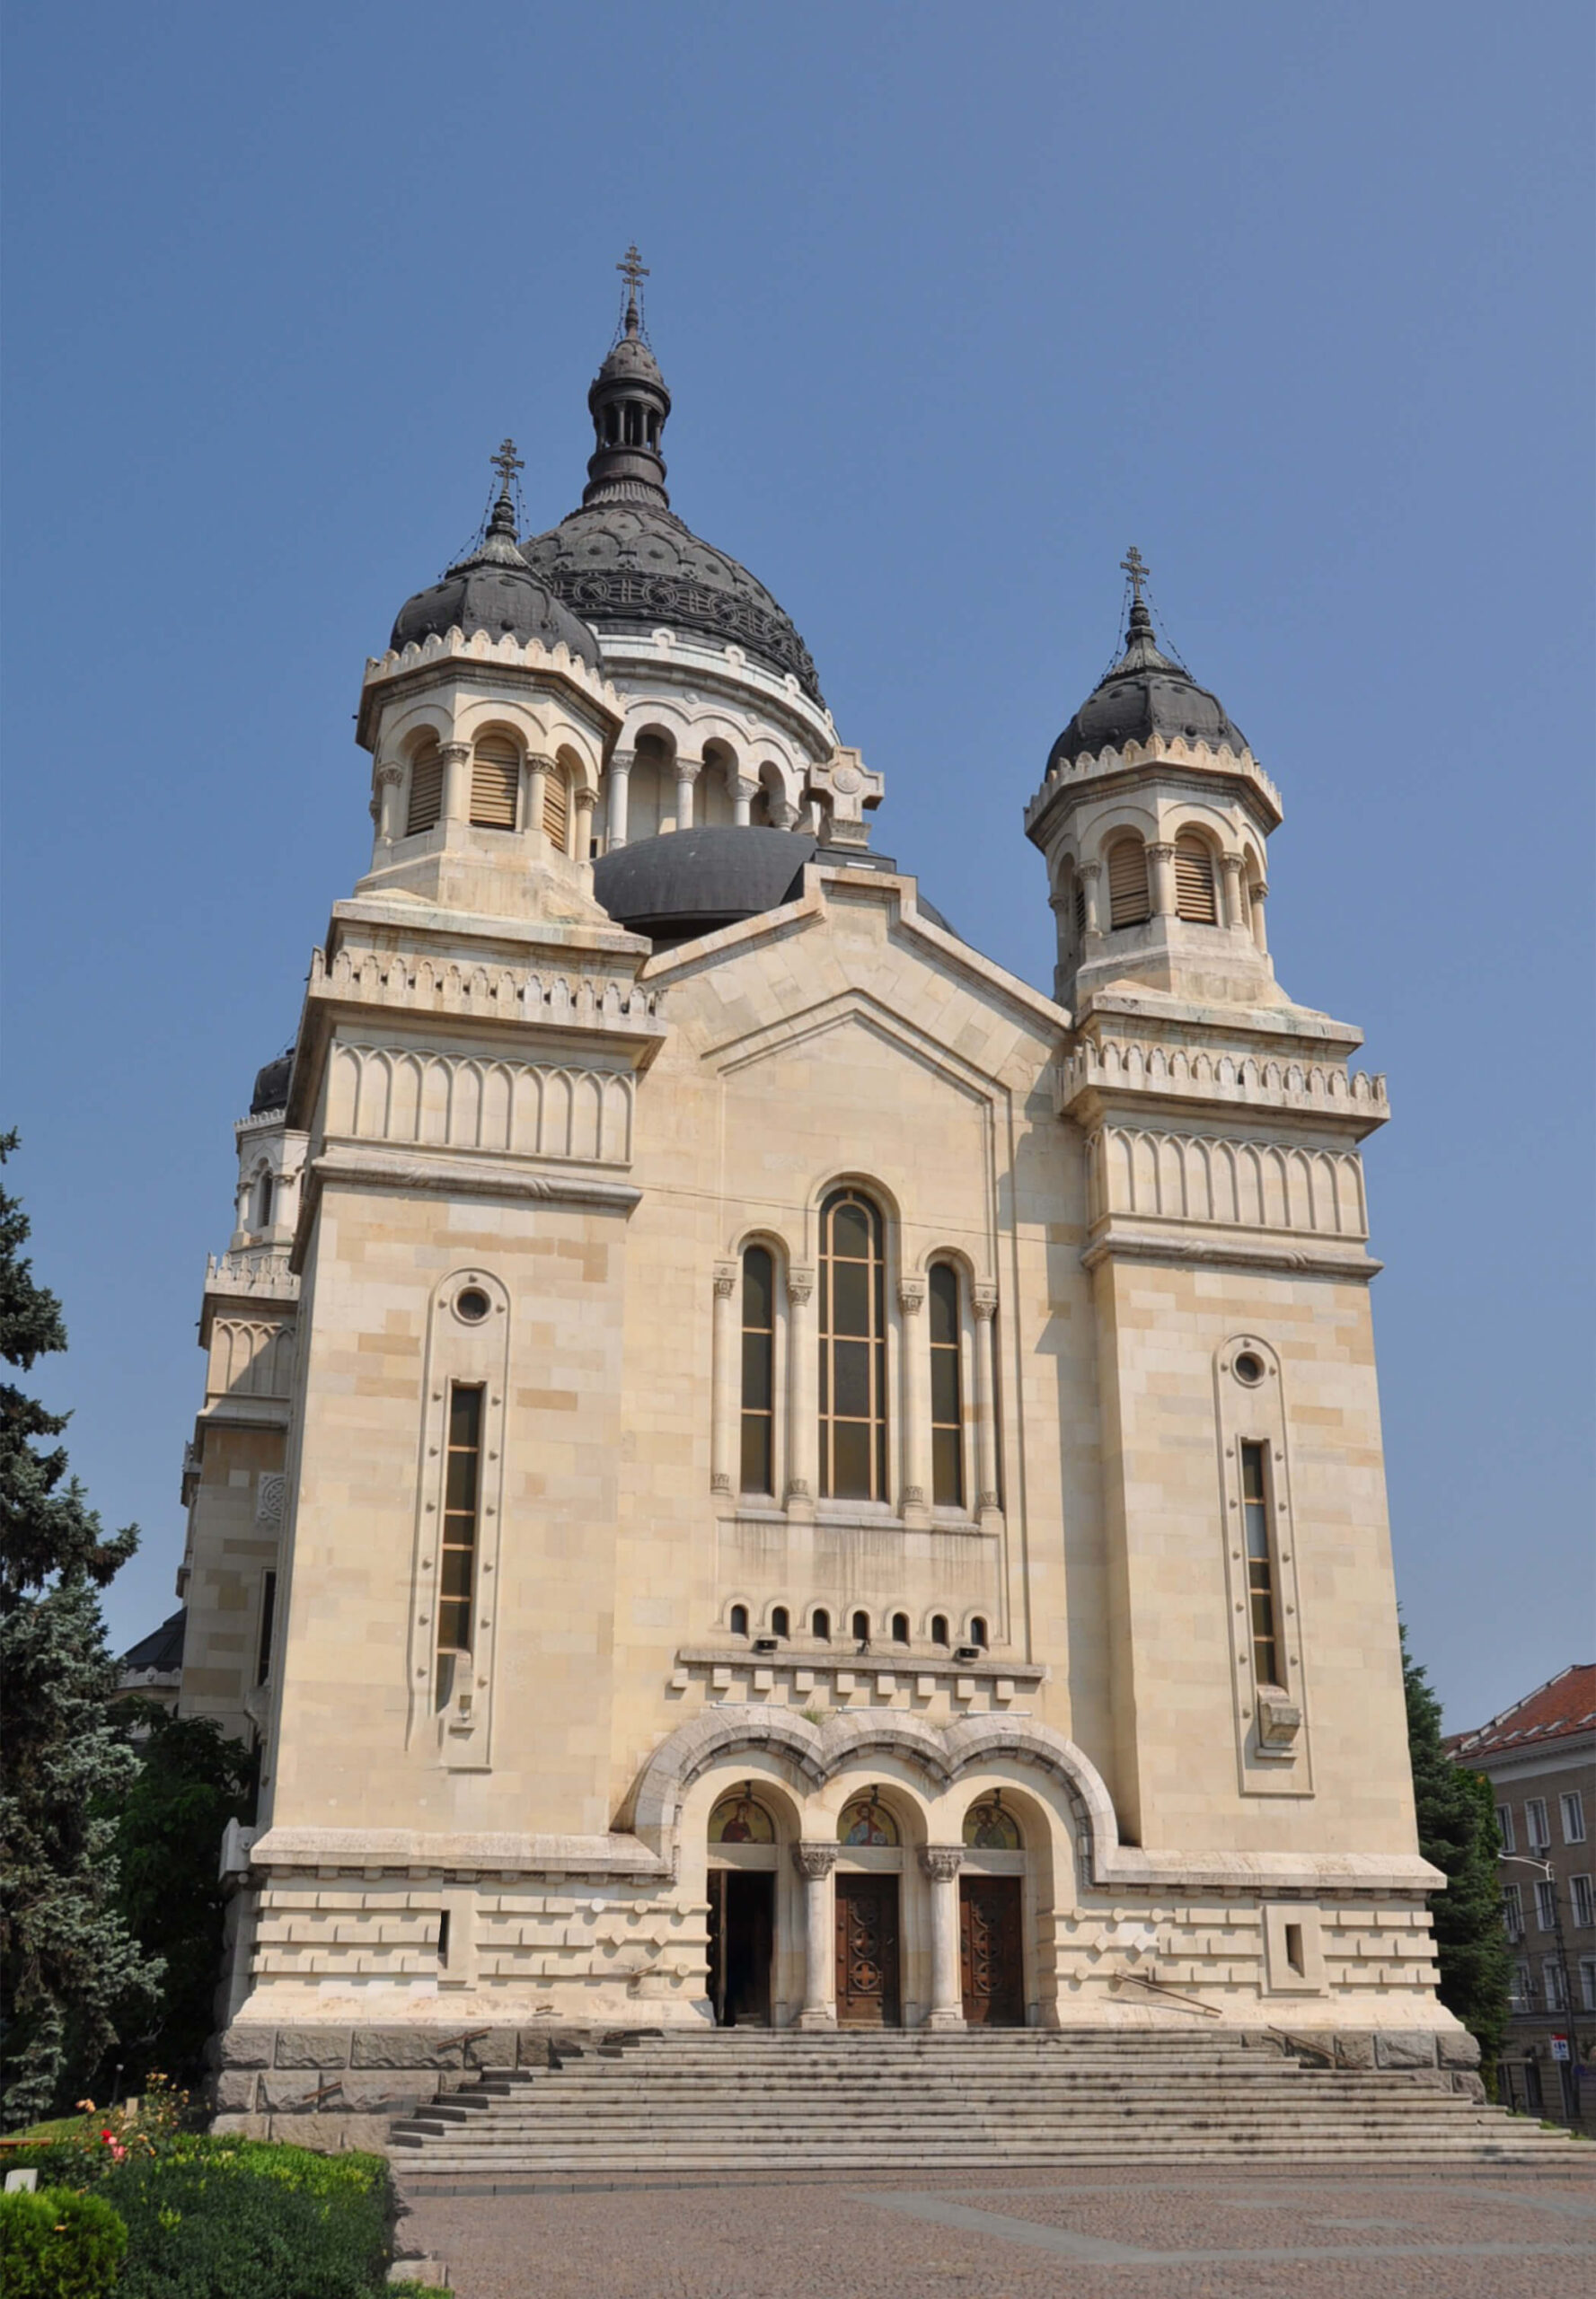 Catedrala Mitropolitana Ortodoxa Cluj Napoca - Romania for All